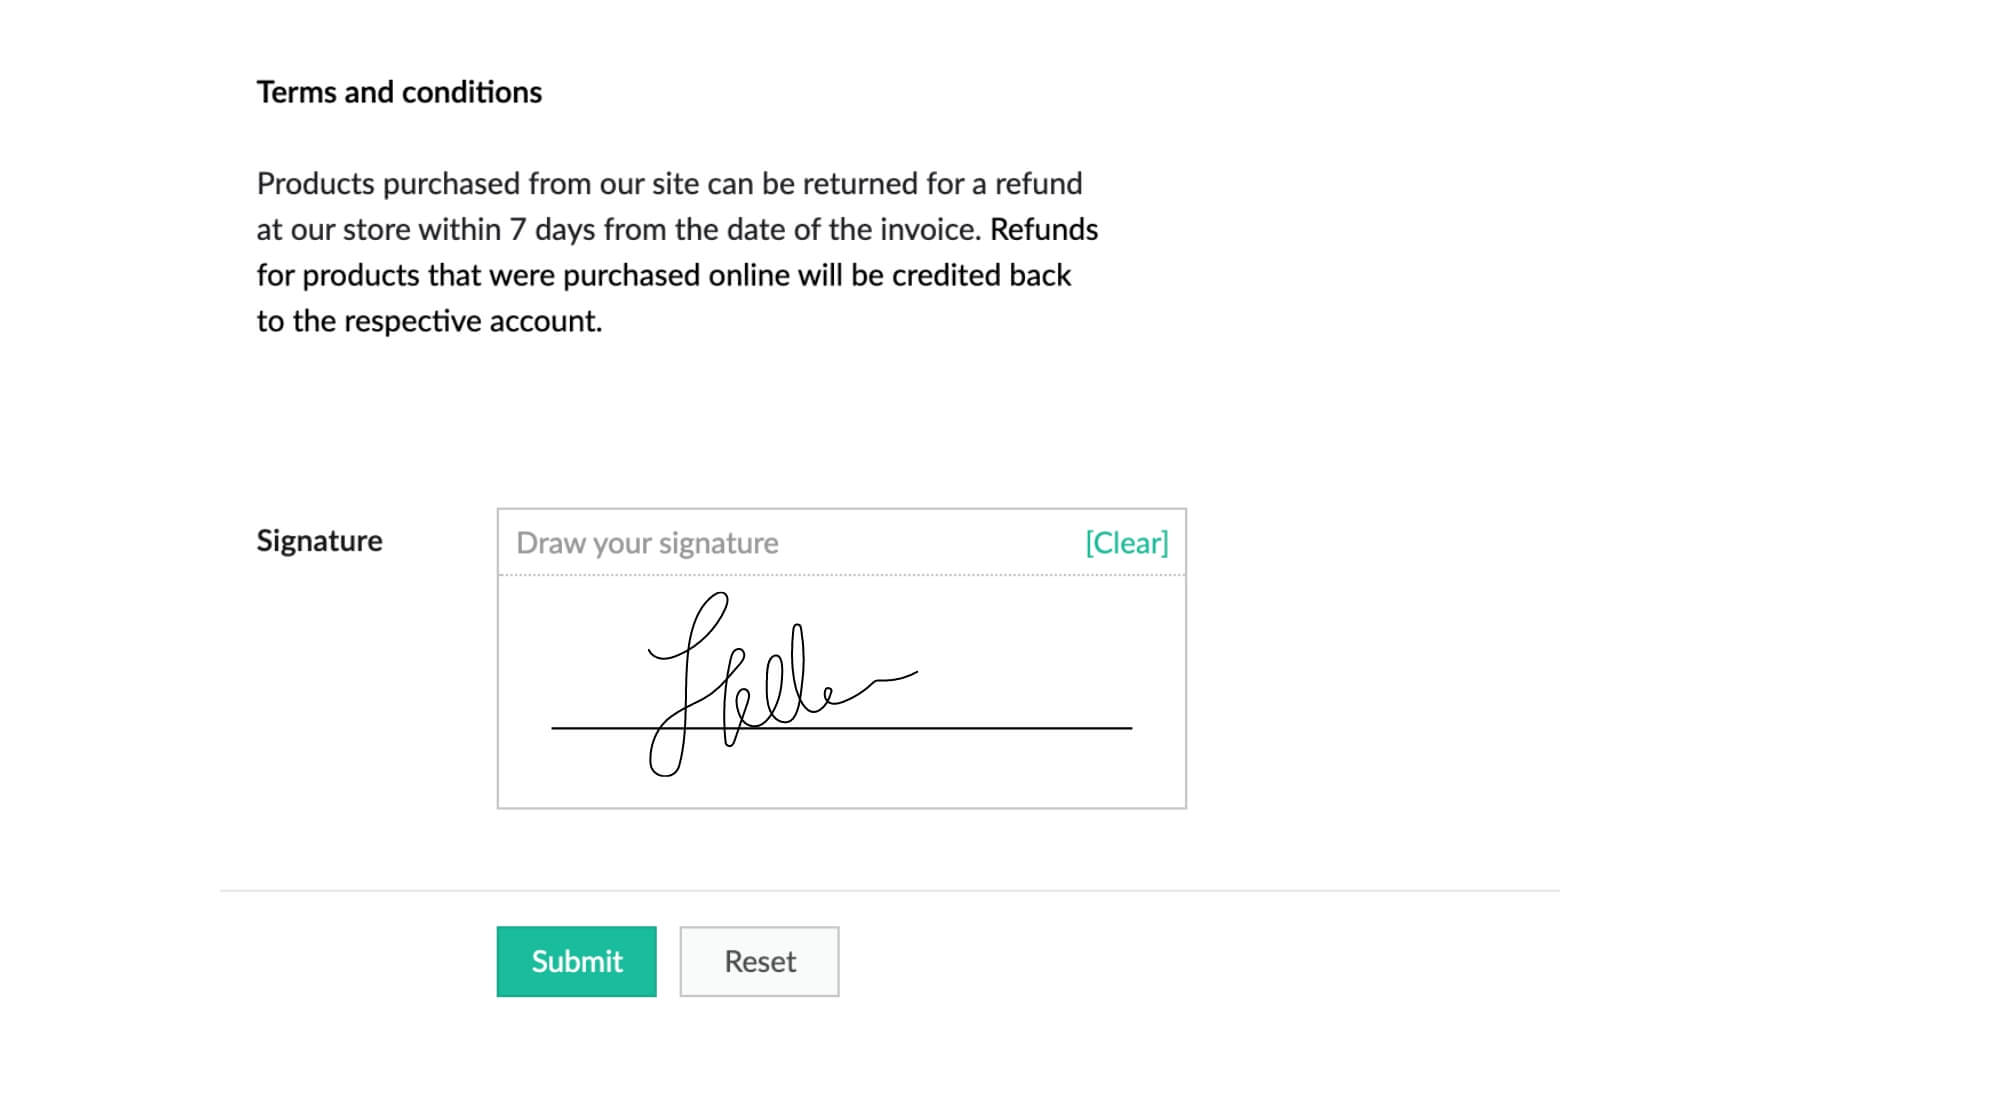 Close deals online with digital signatures